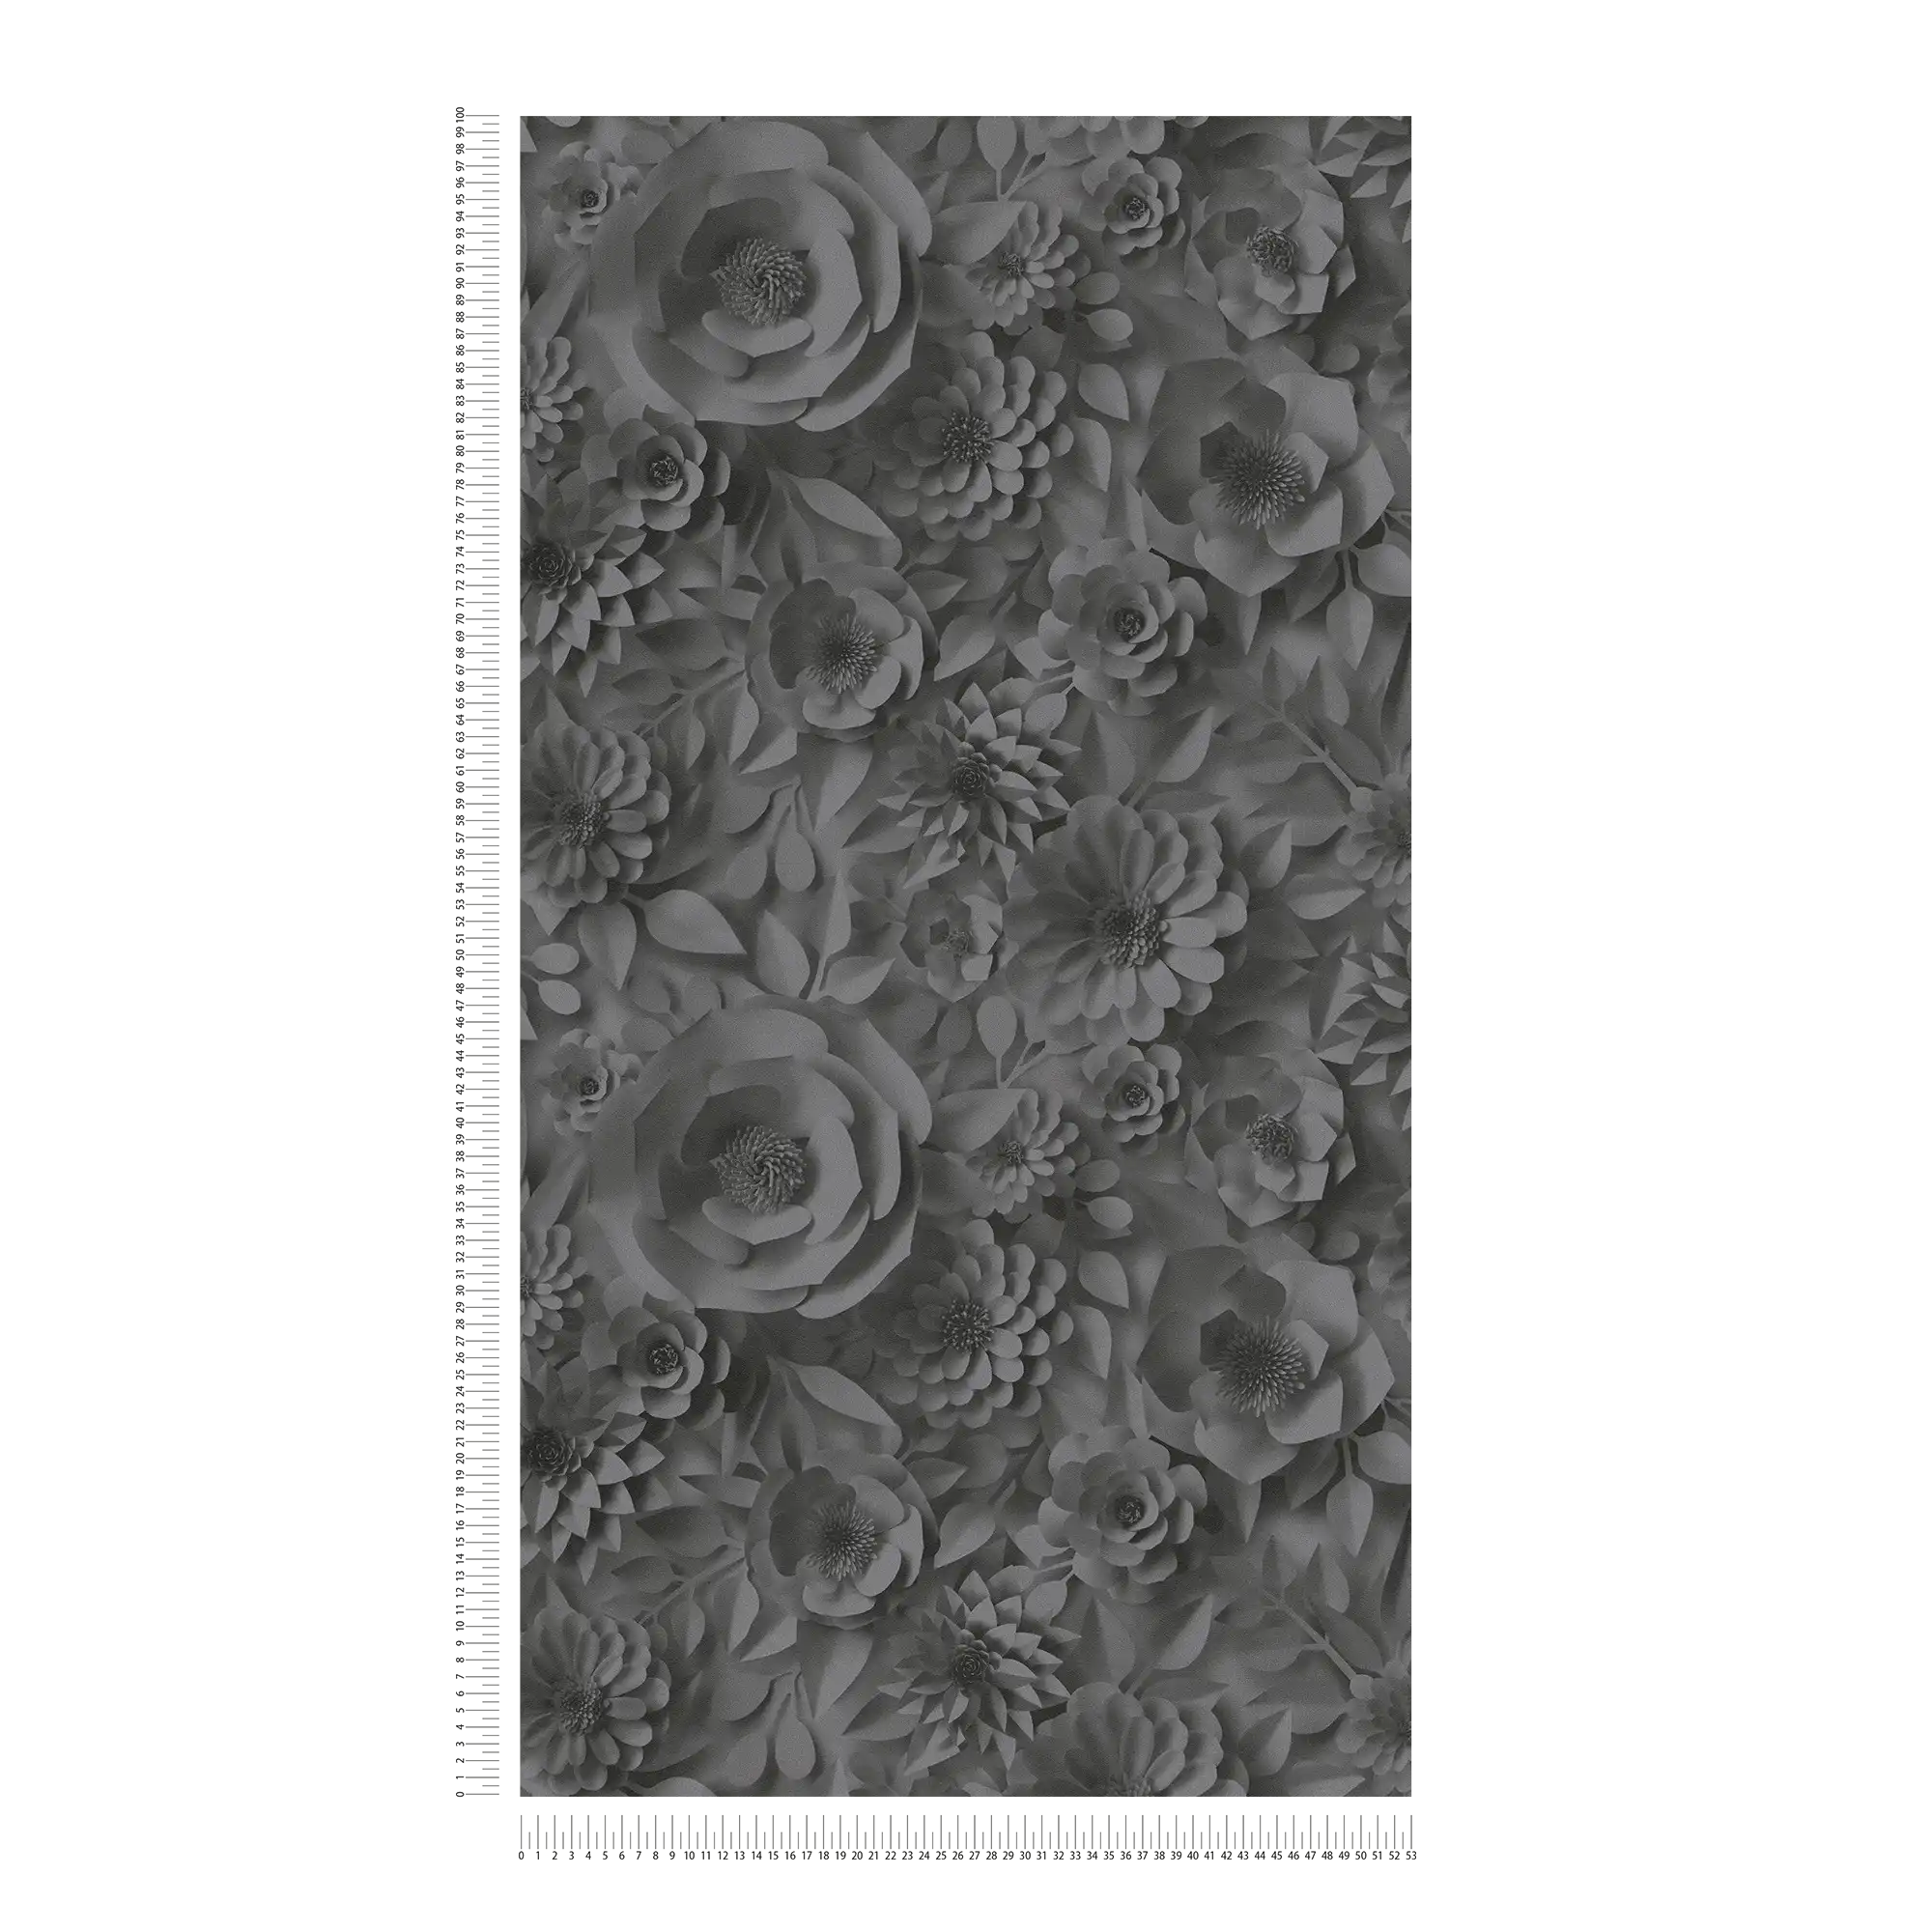             3D papier bloemen behang - Grijs, Zwart
        